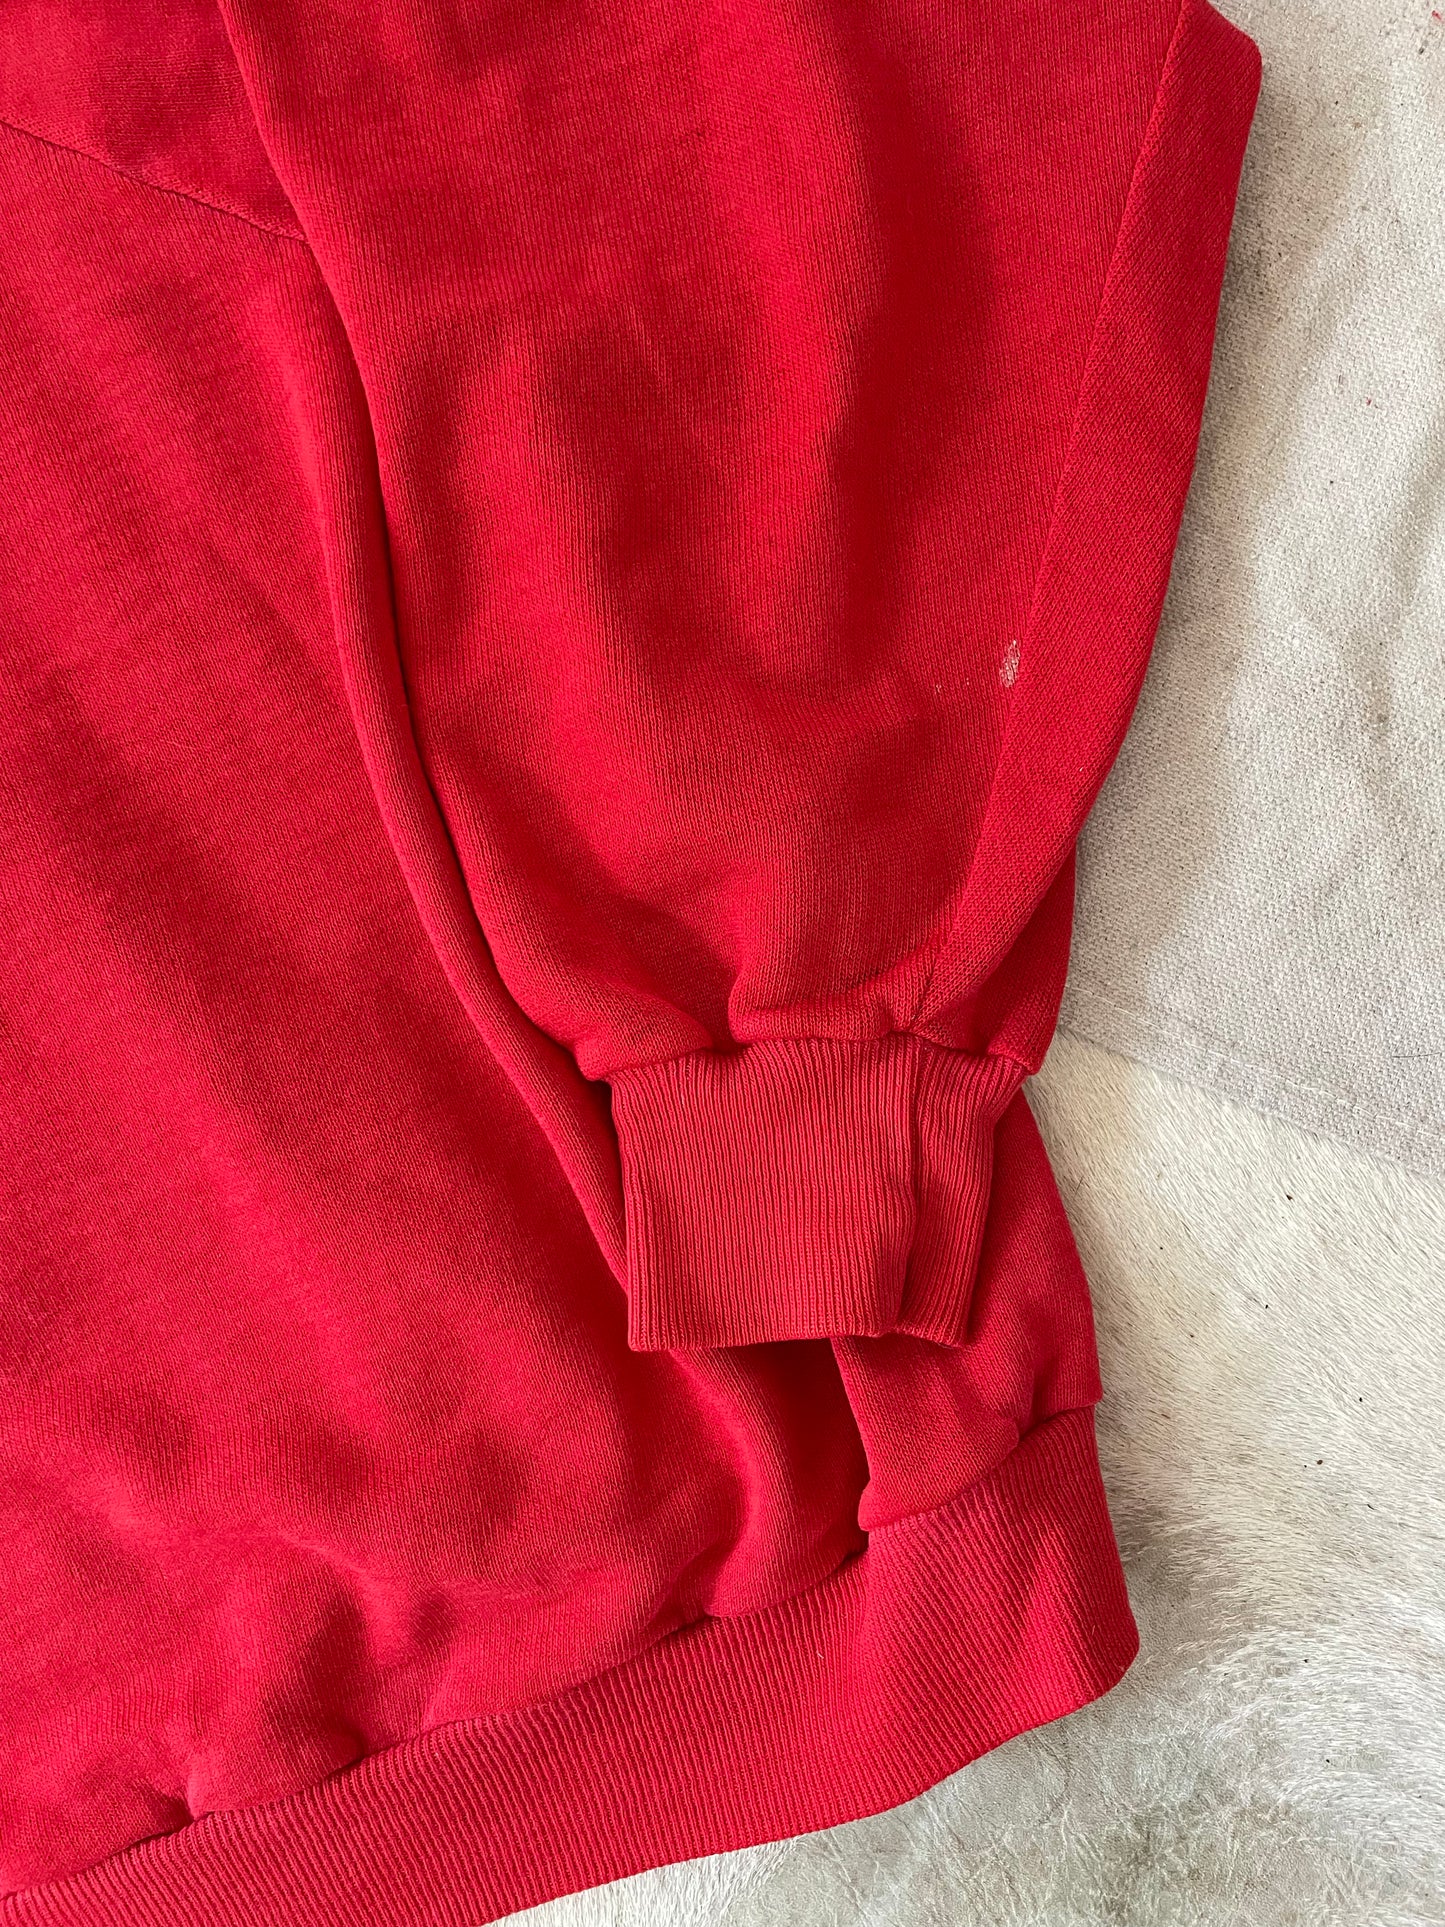 70s/80s Blank Red Sweatshirt